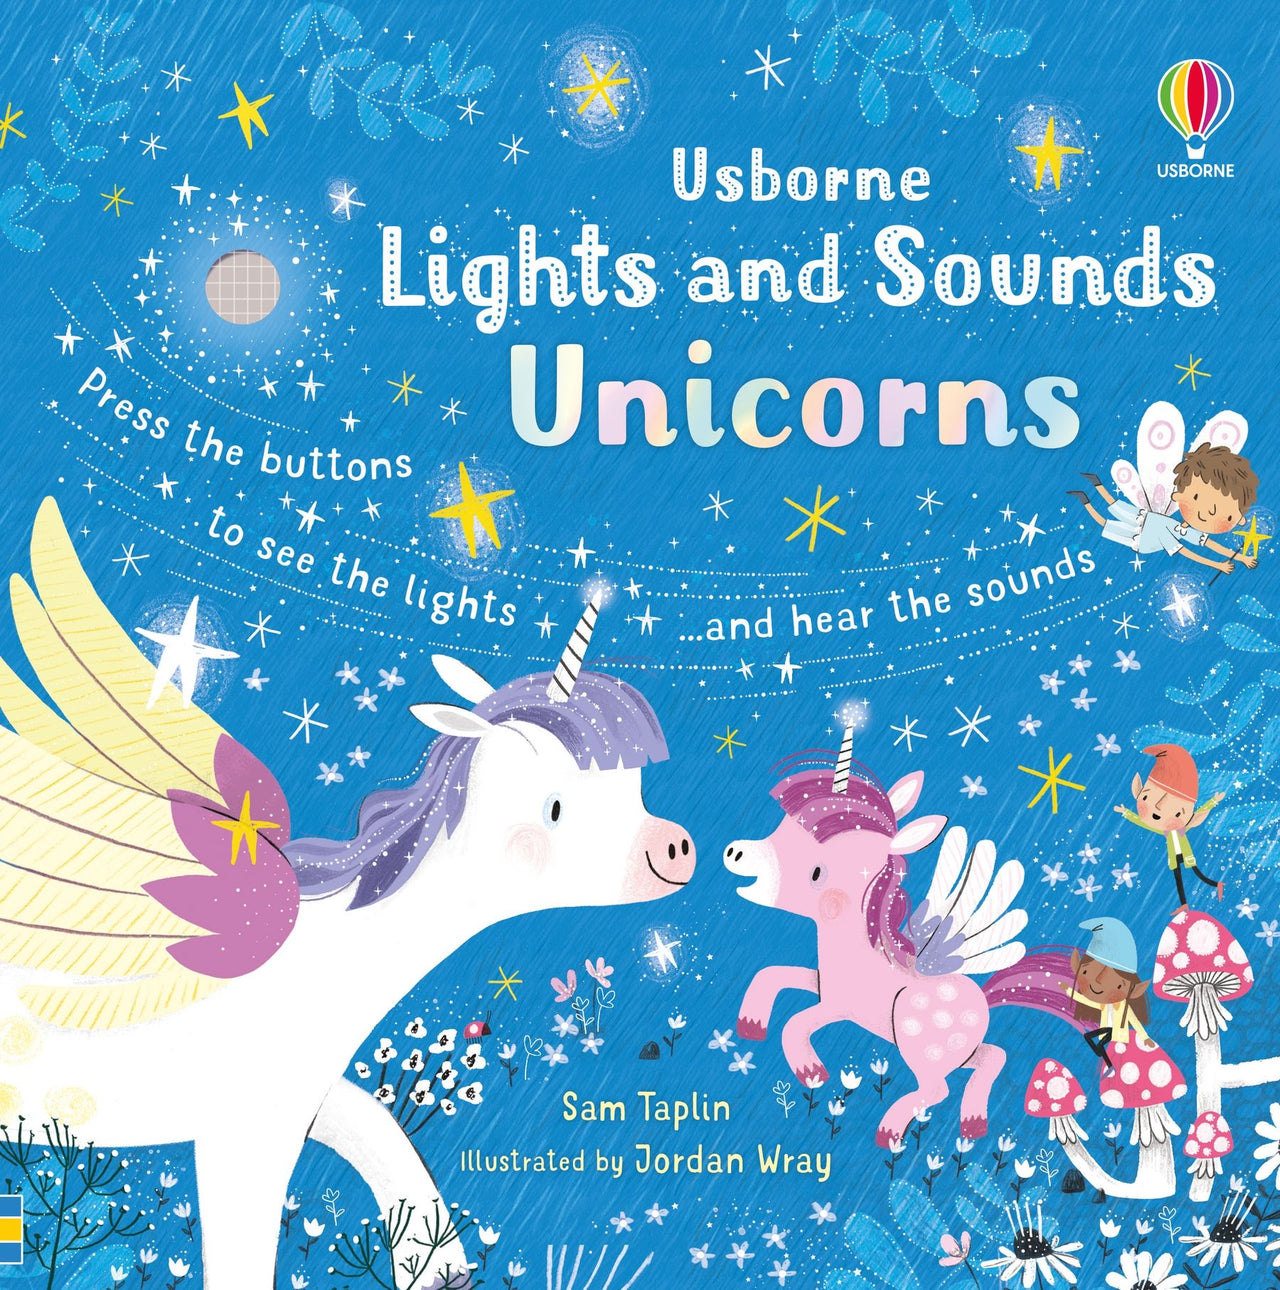 EDC Lights and Sounds: Unicorns